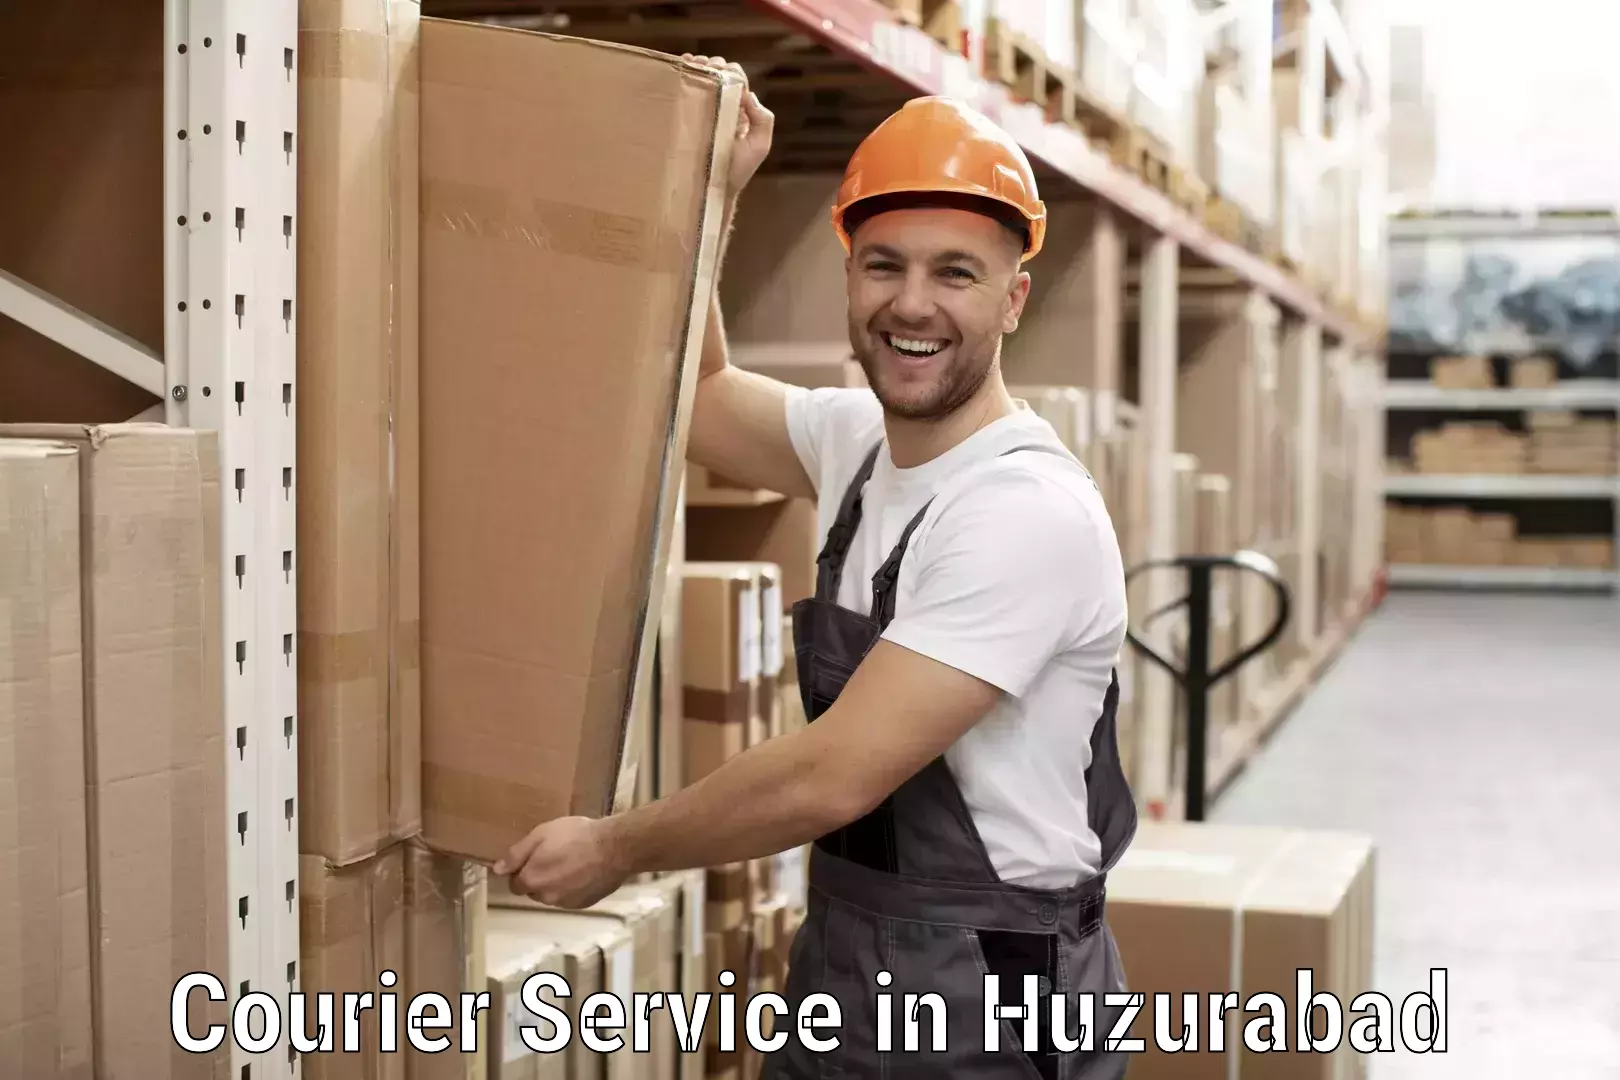 High-priority parcel service in Huzurabad